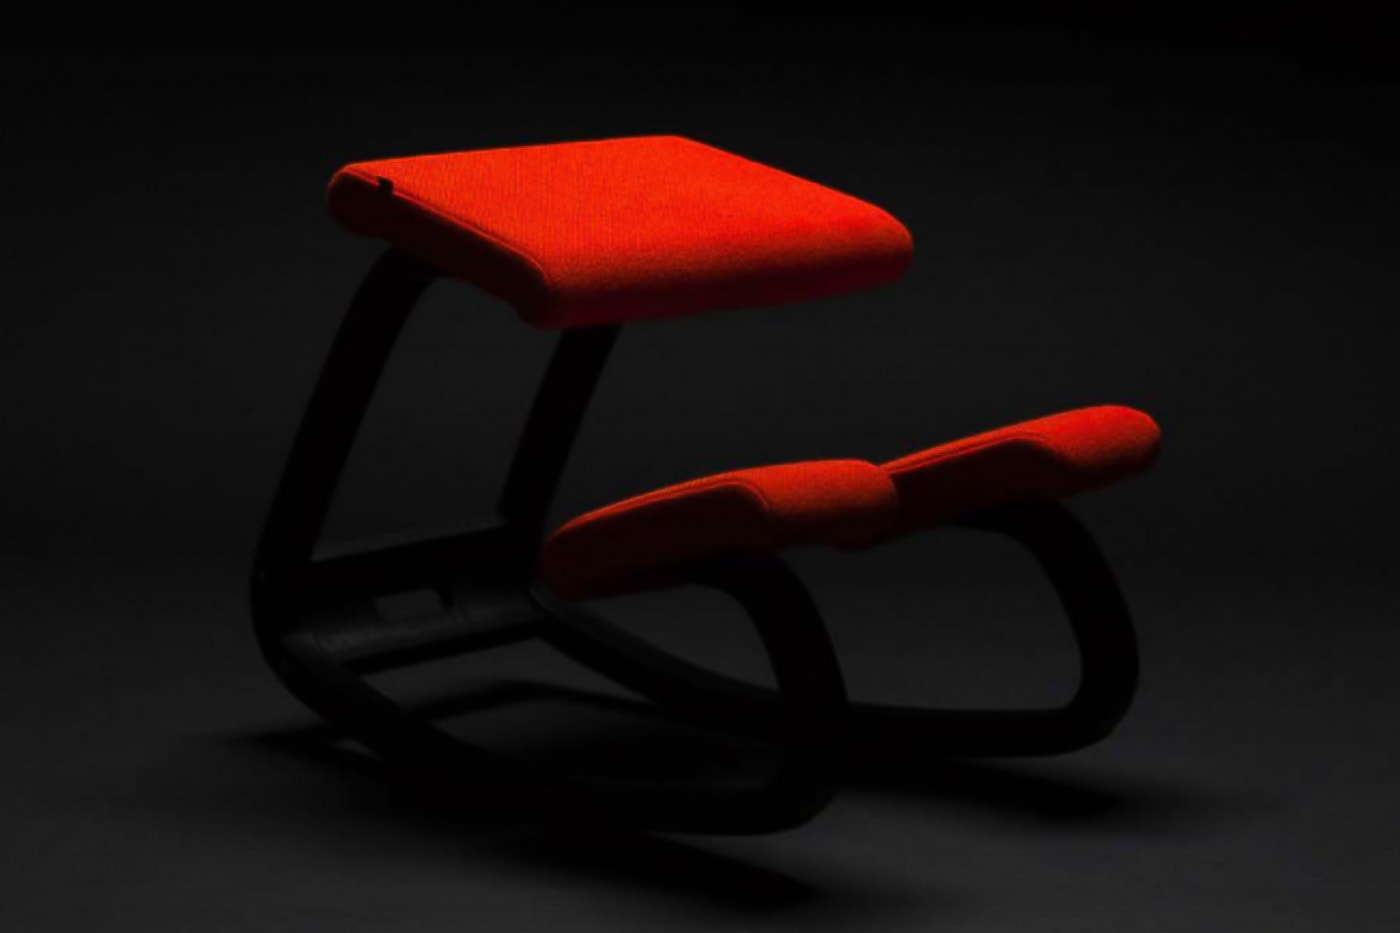 Varier Snøhetta Ergonomic Design Variable Chair New Colors Textures